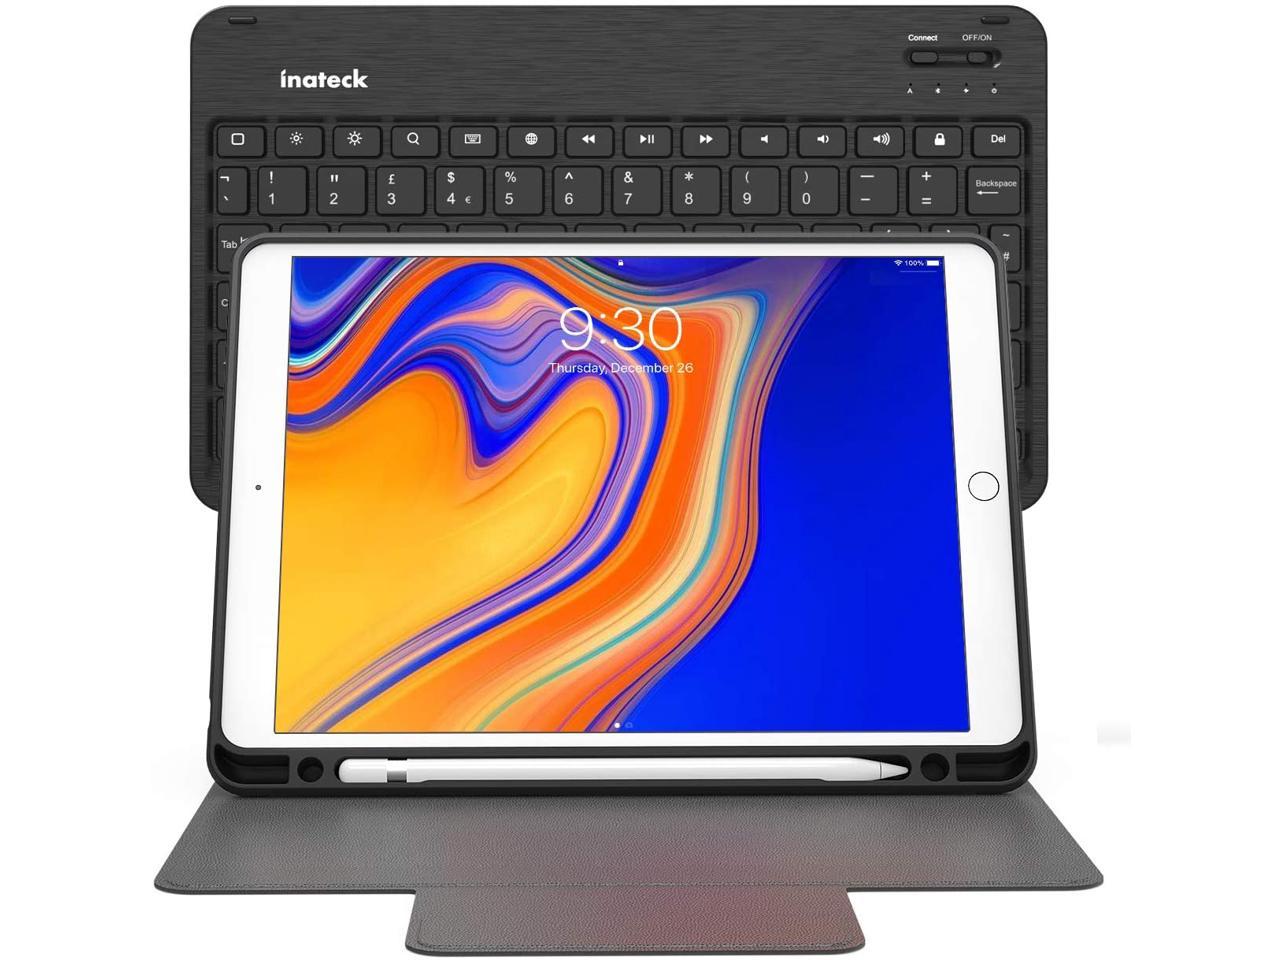 Detachable /iPad 2020 7th Gen Pink with Kickstand and DIY Backlit /iPad 2019 iPad Pro 10.5 10.2 Inch KB02015 Inateck Keyboard Case for iPad 2021 8th Gen iPad Air 3 9th Gen